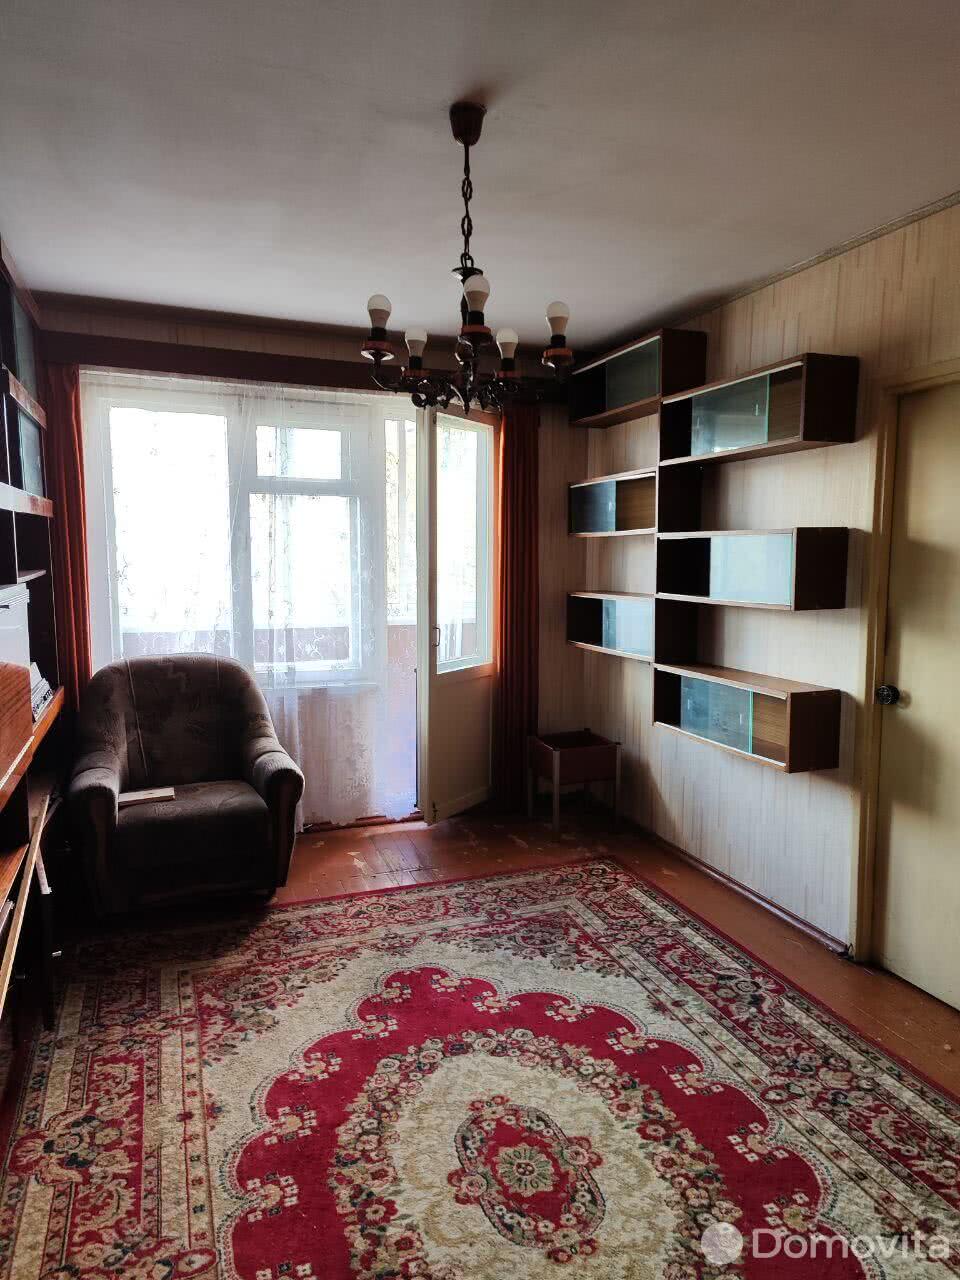 квартира, Минск, ул. Плеханова, д. 115, стоимость продажи 209 626 р.